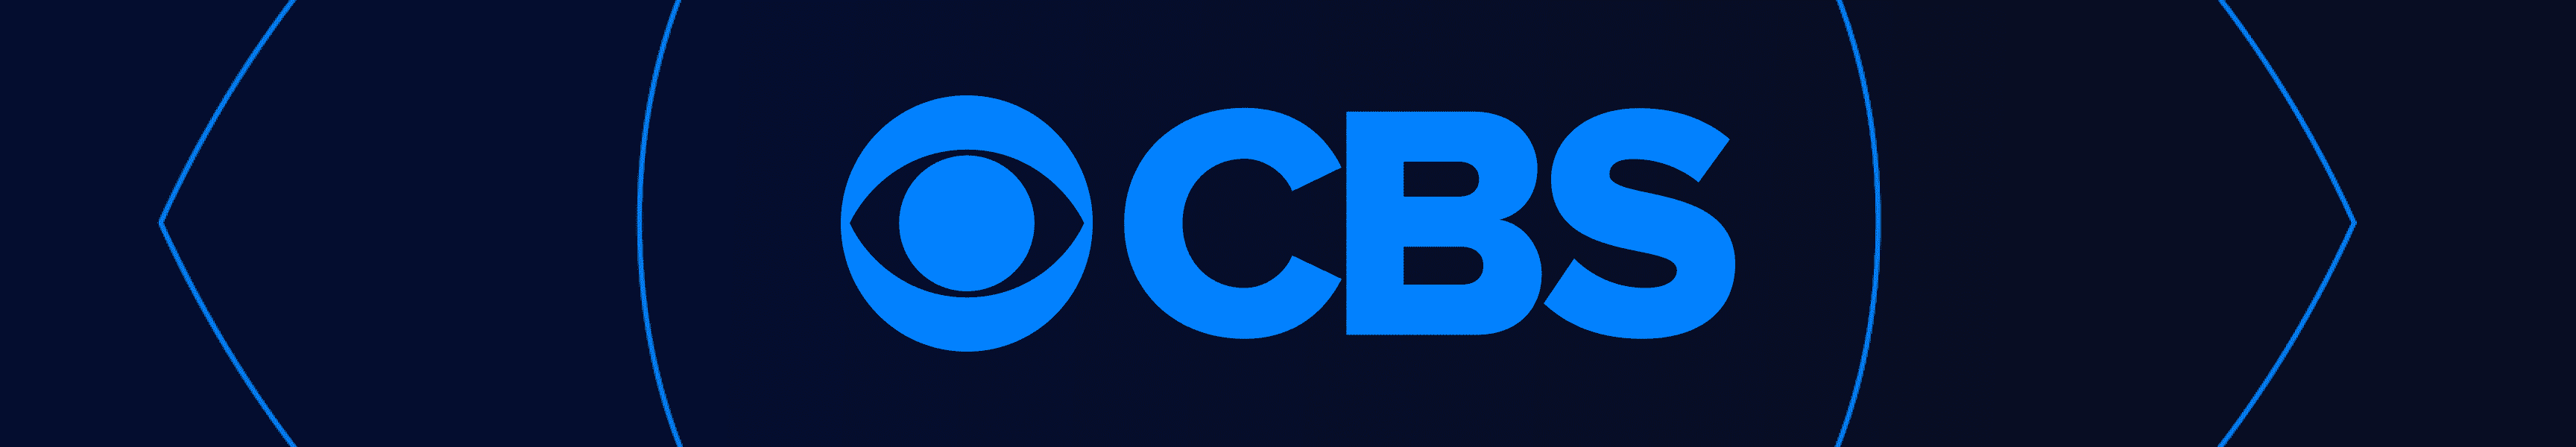 CBS Entertainment Logo